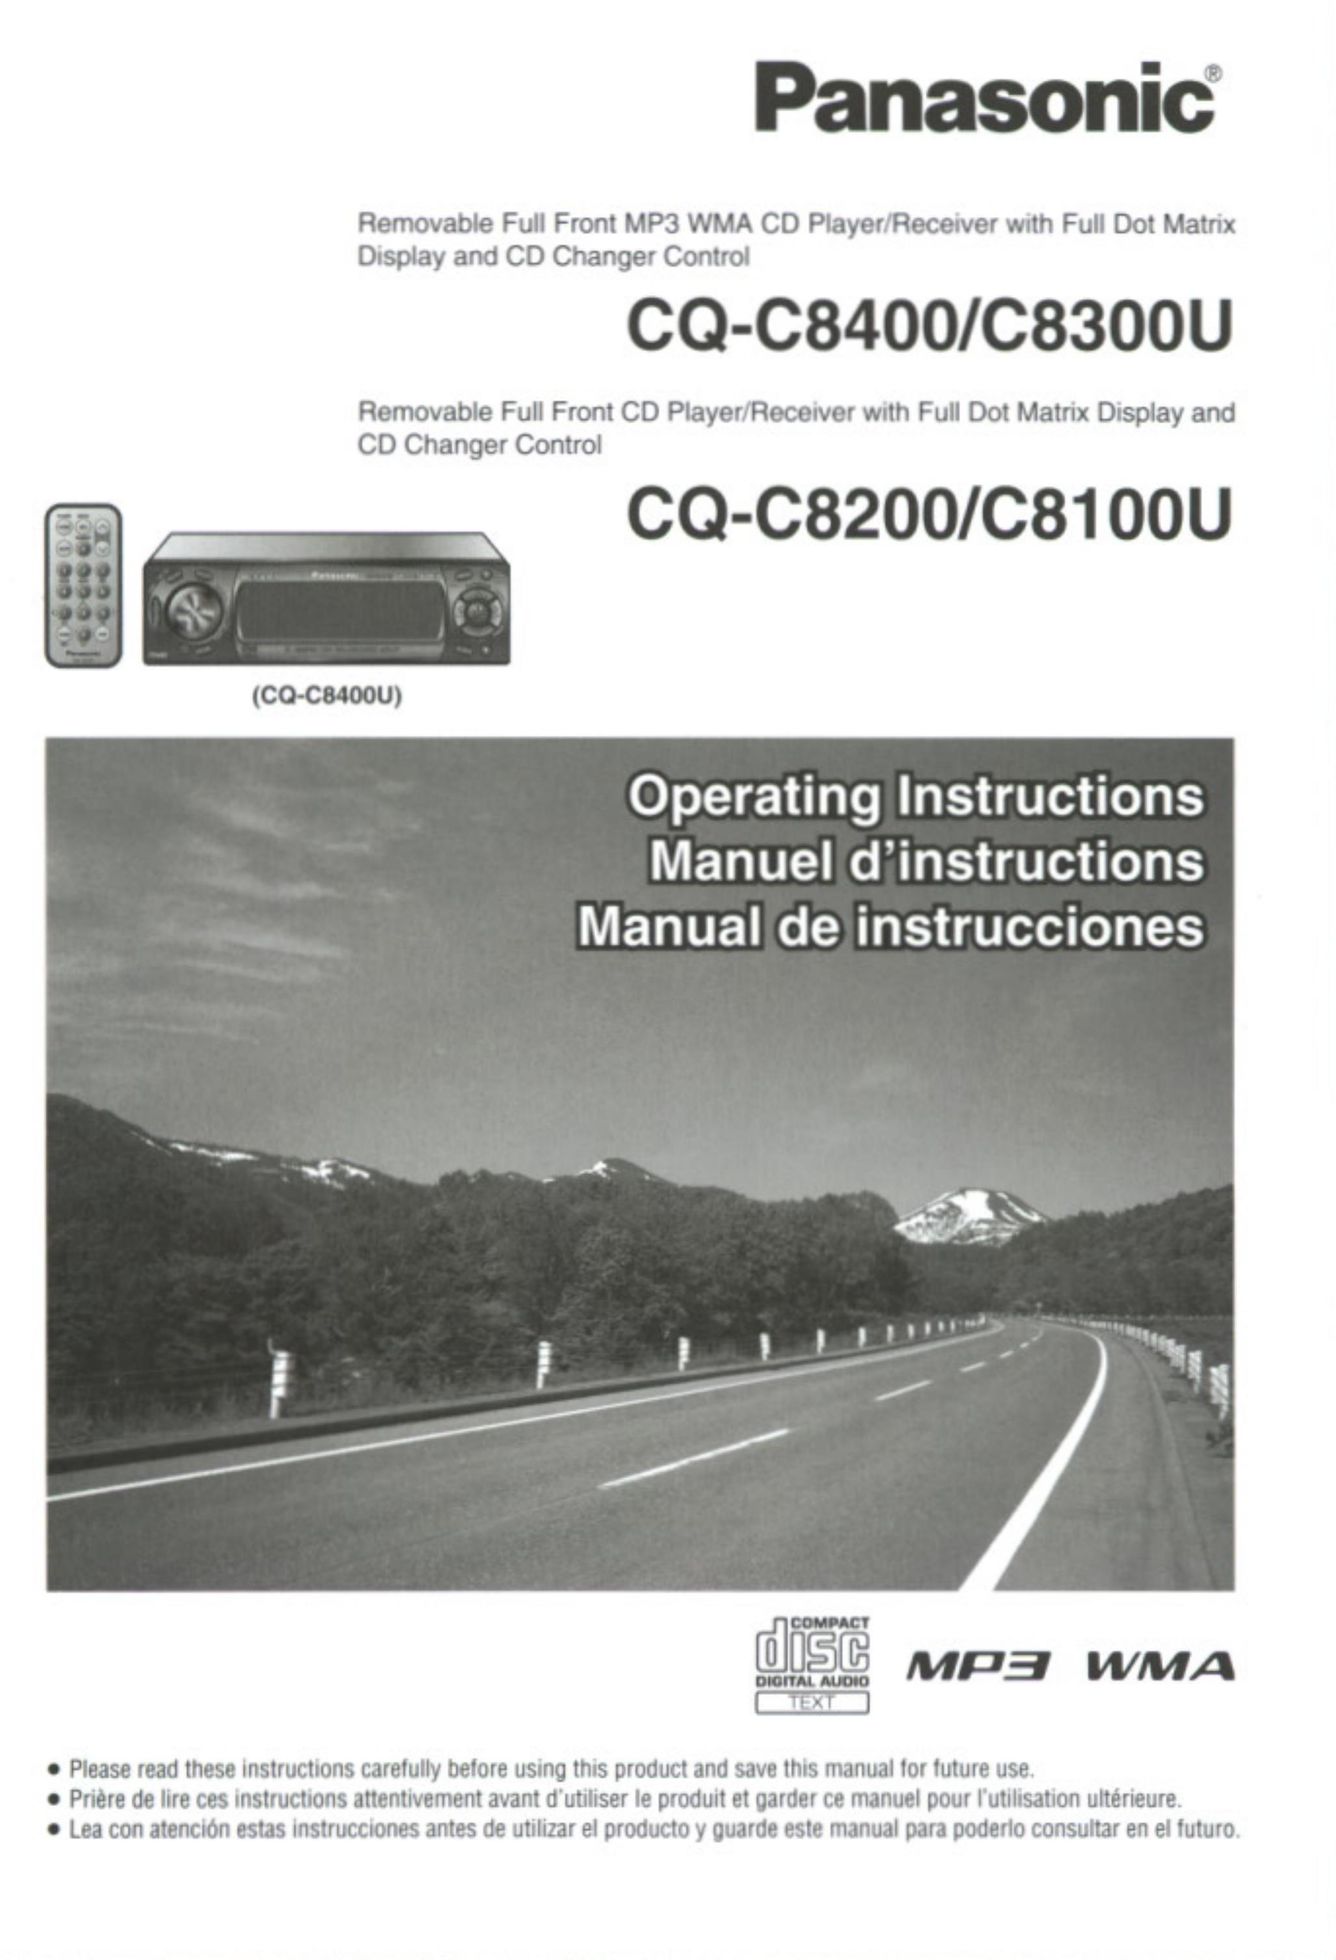 Panasonic CQ-C8400 CD Player User Manual